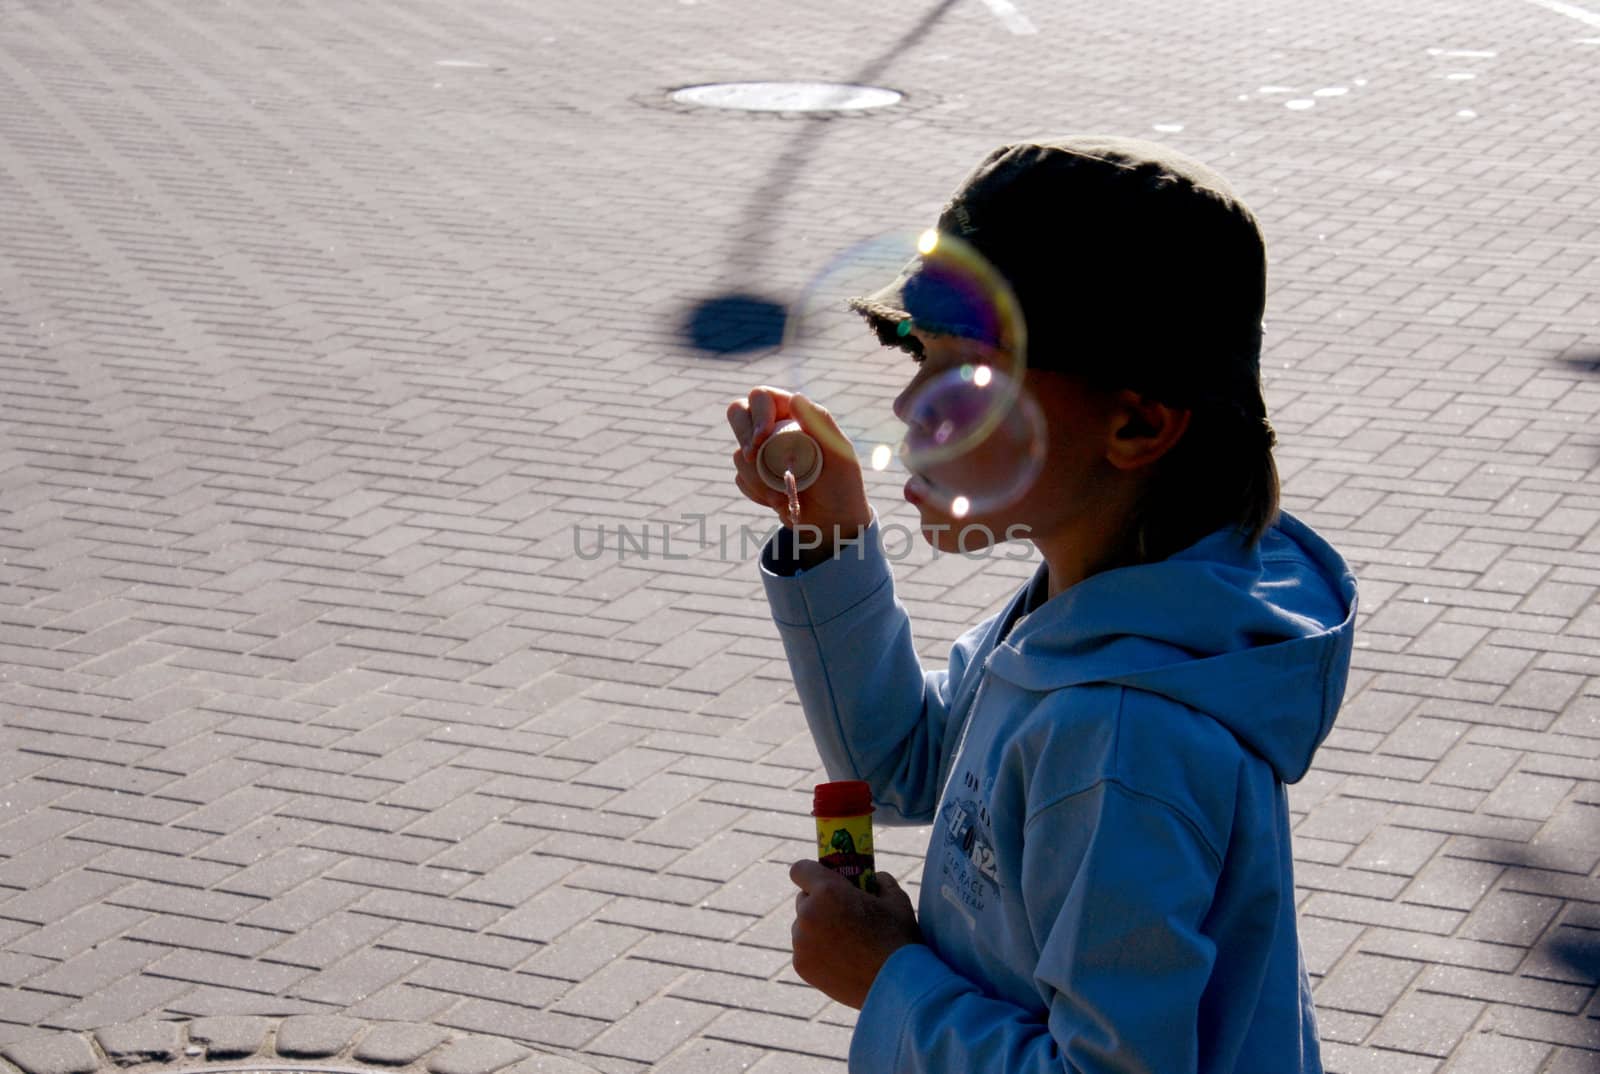 Kid in blue blowing big soap bubbles